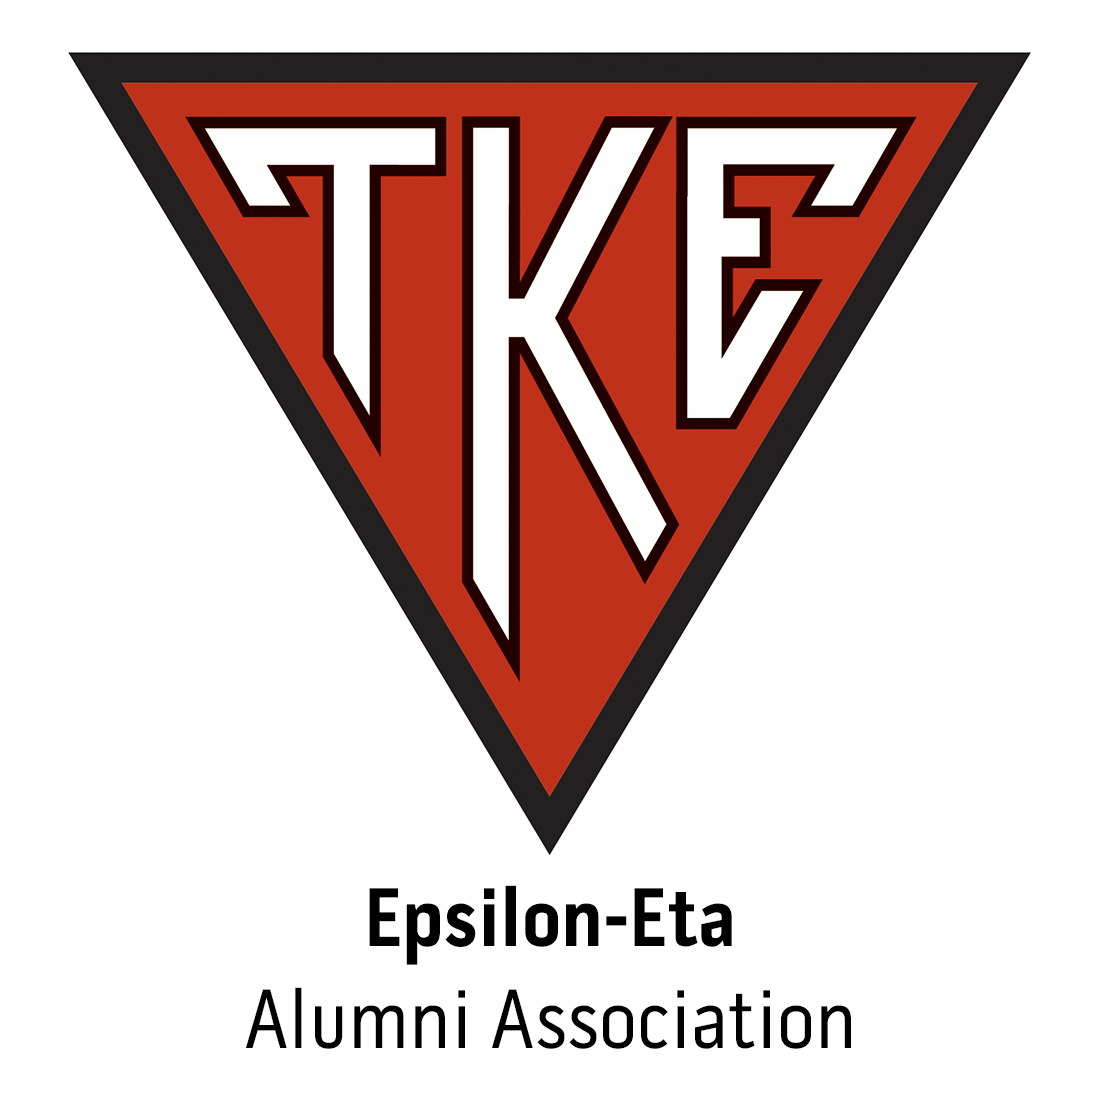 Epsilon-Eta Alumni Association at Southwestern Oklahoma State University